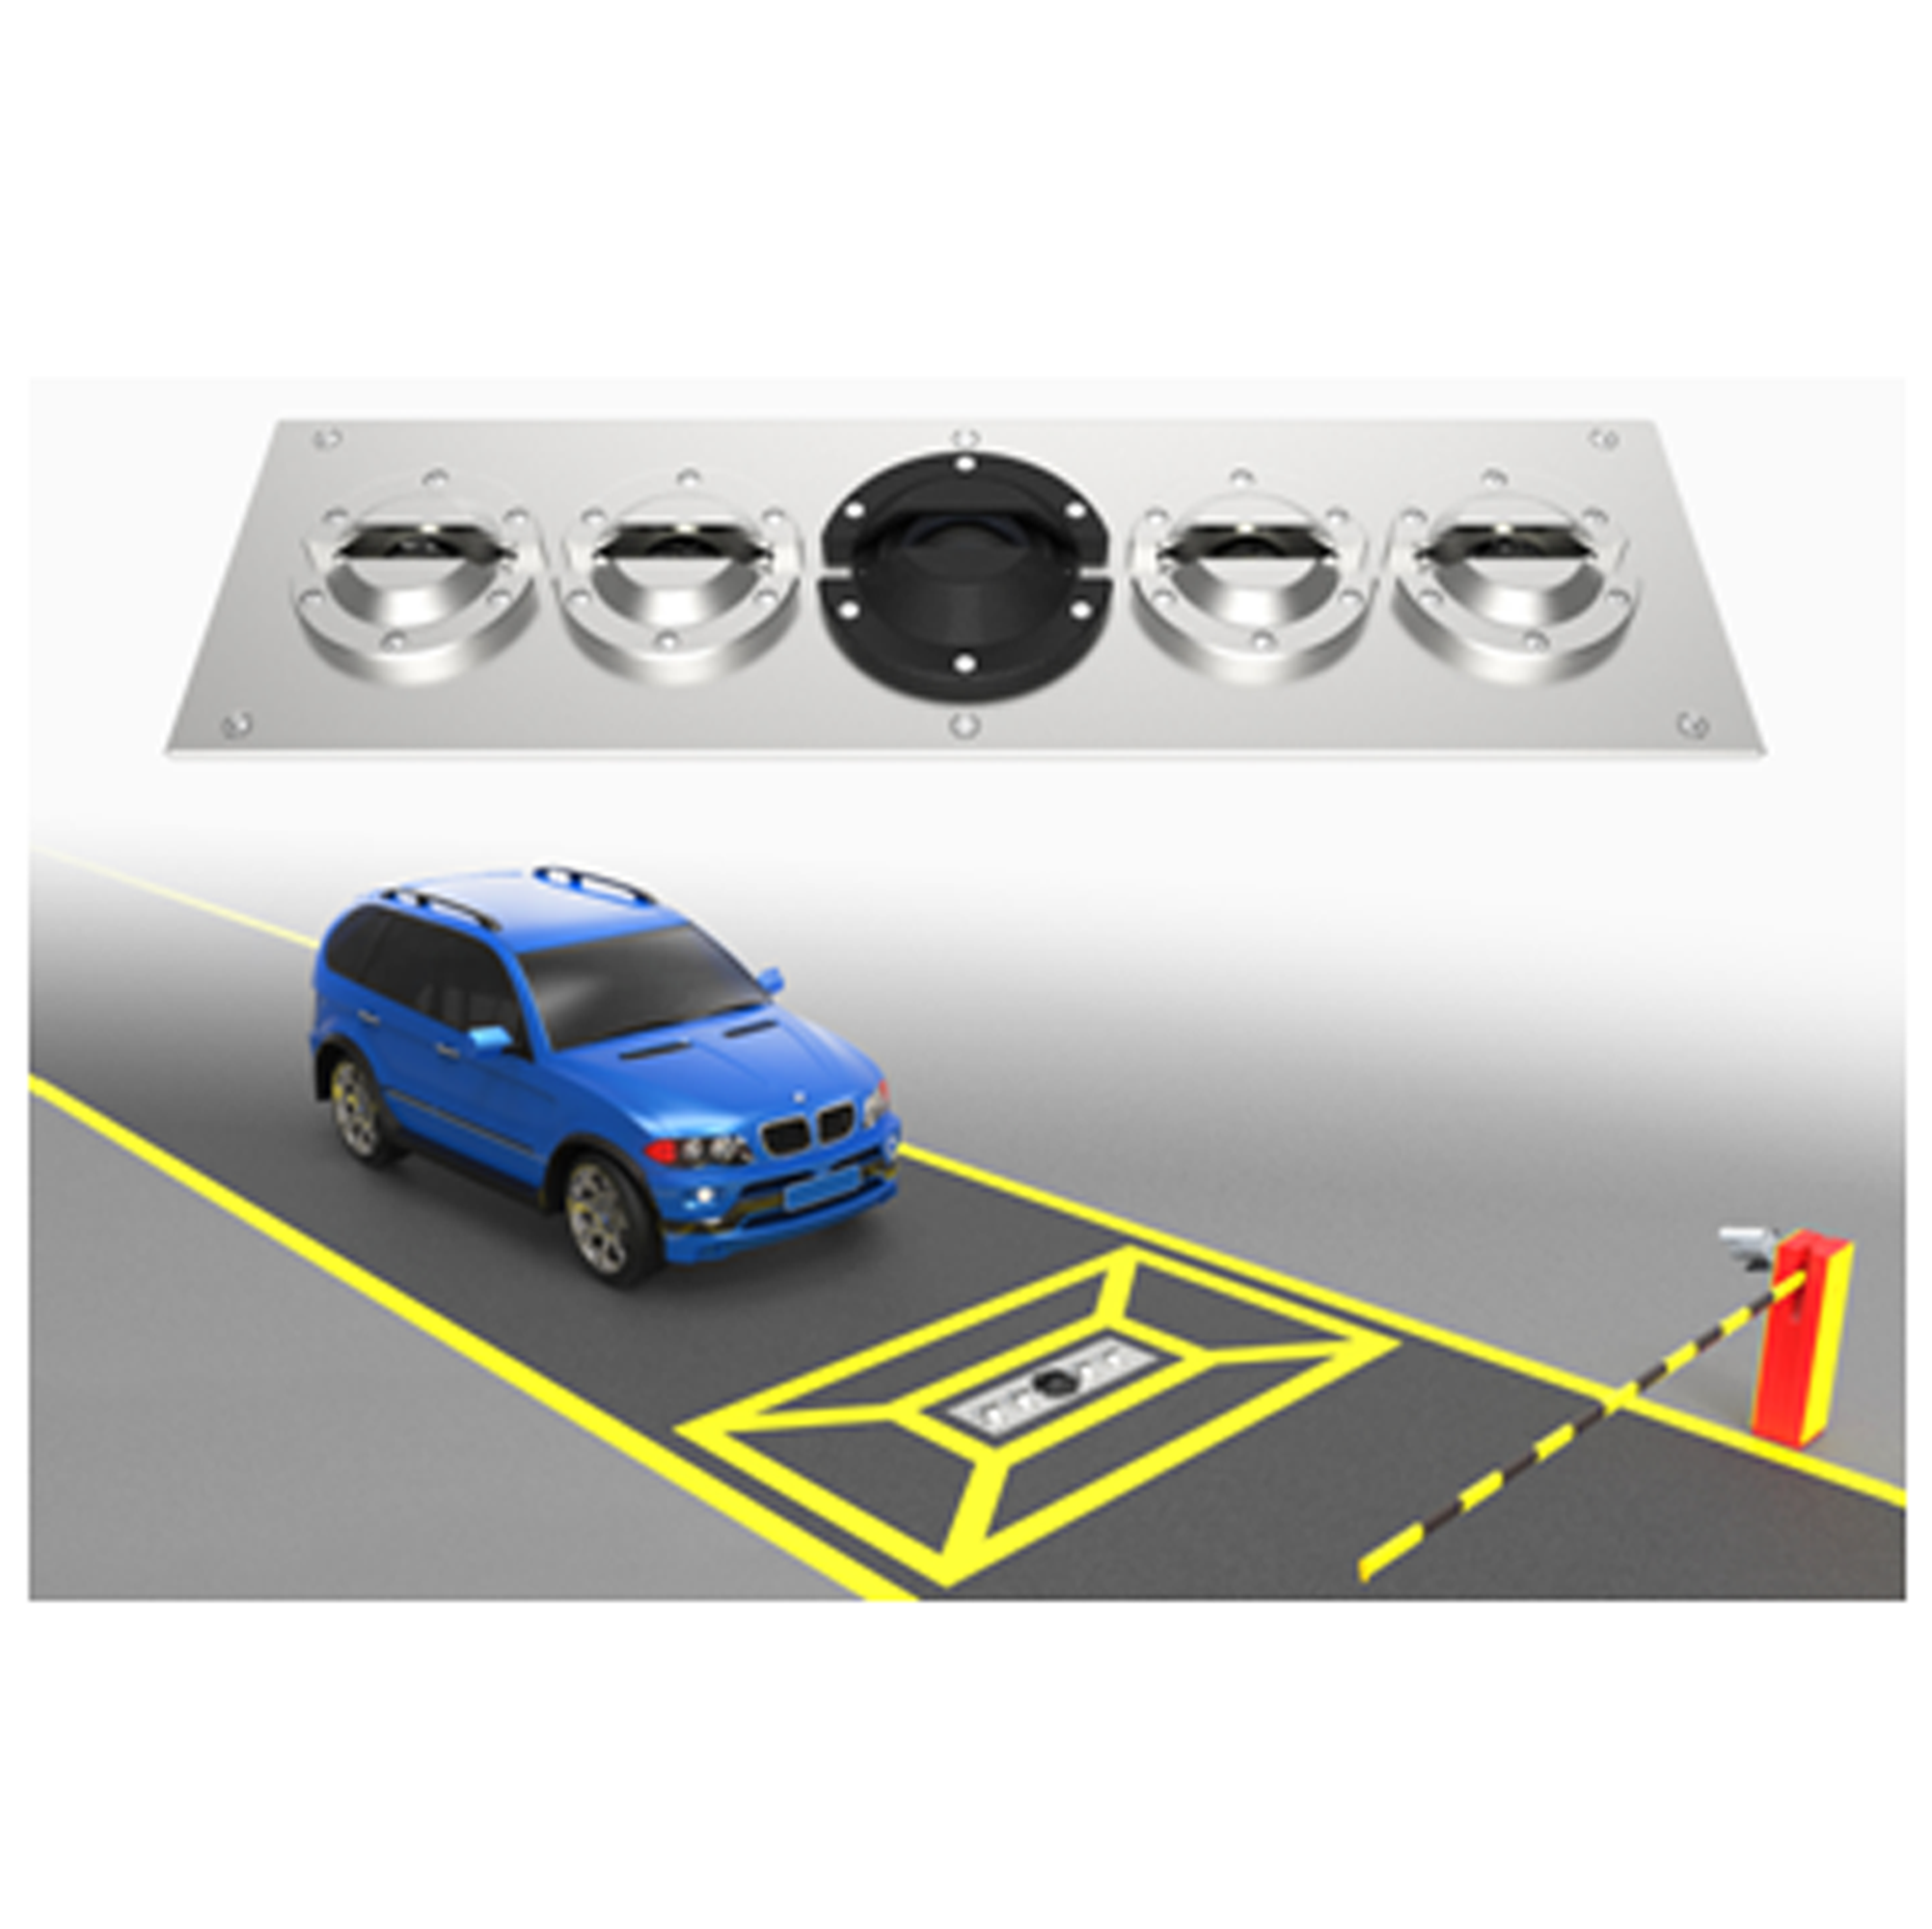 Under Vehicle Surveillance System: UV300-F